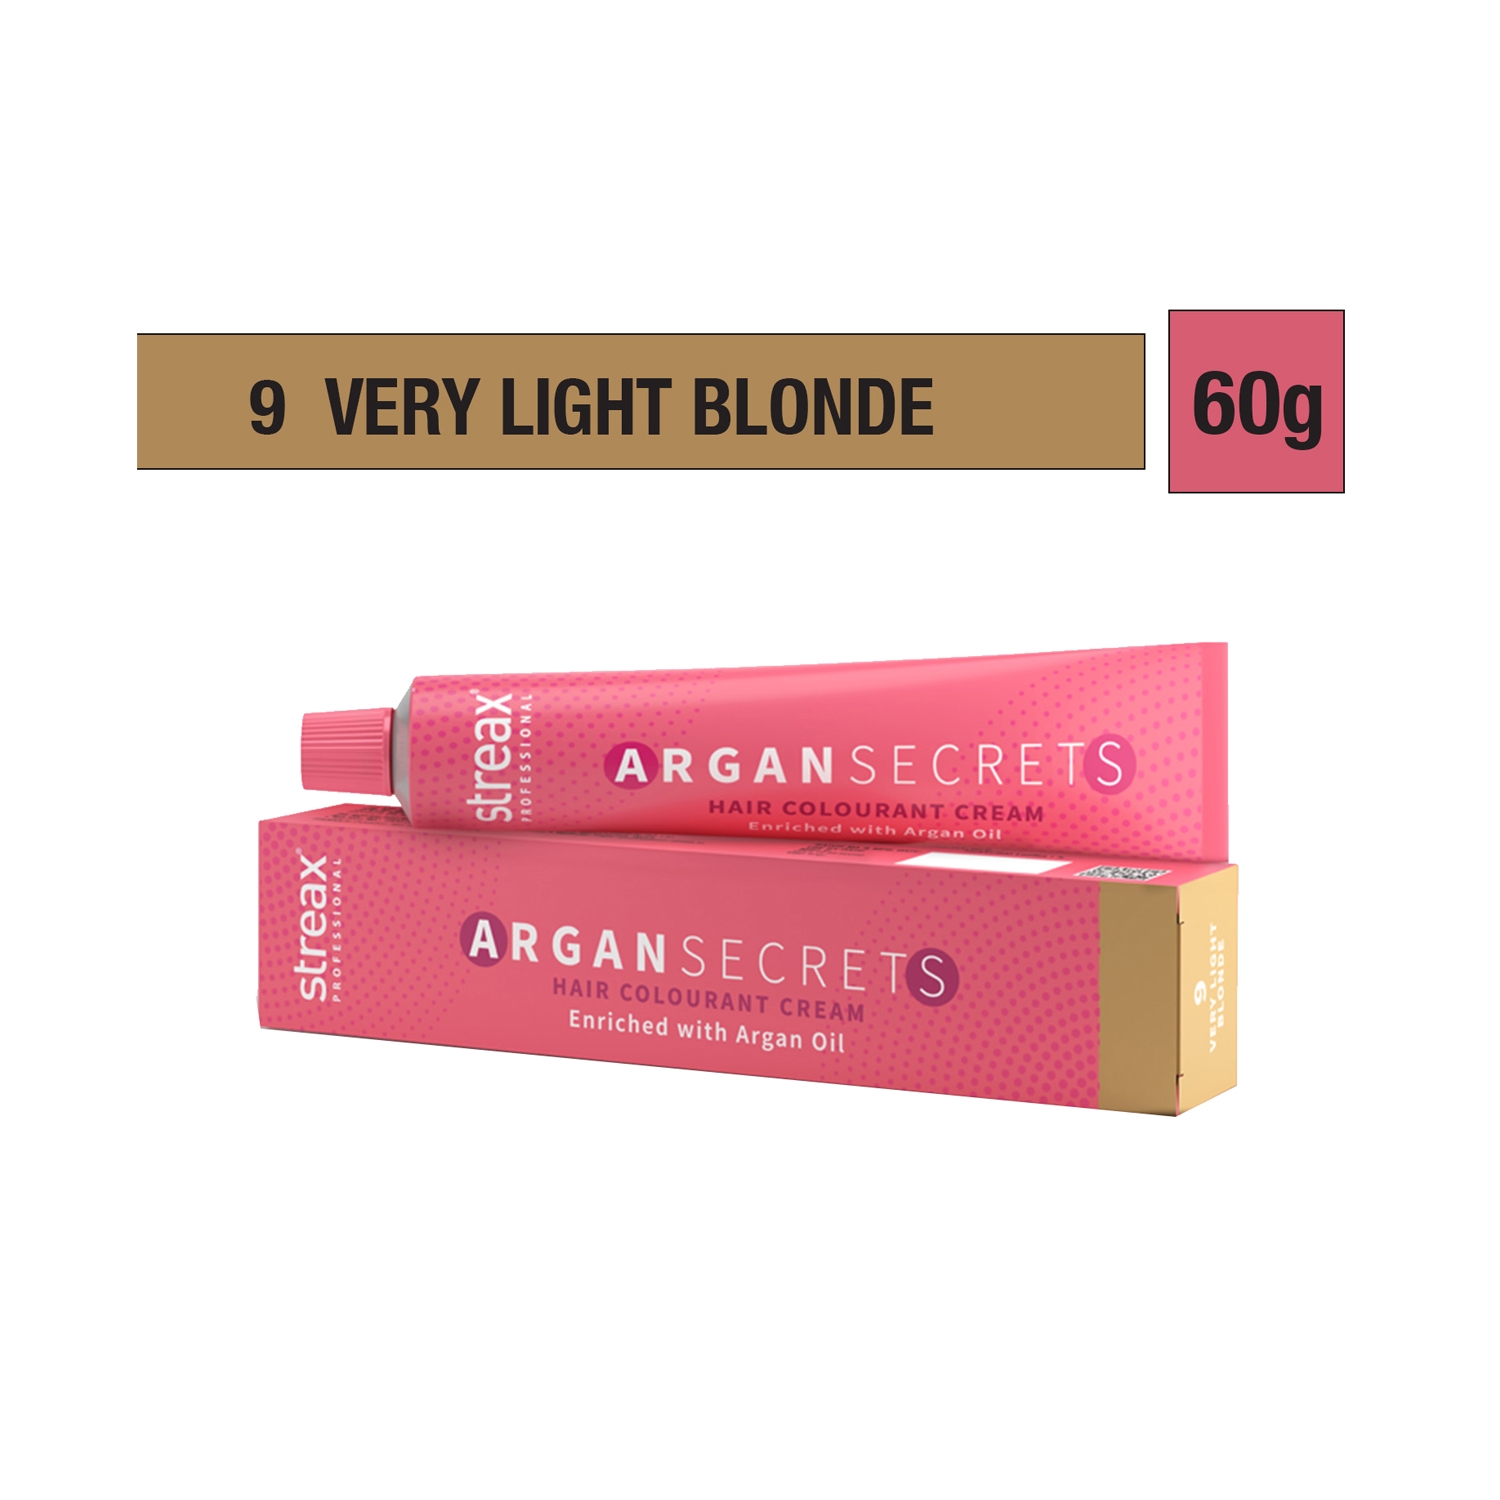 Streax Professional | Streax Professional Argan Secrets Hair Colorant Cream - 9 Very Light Blonde (60g)